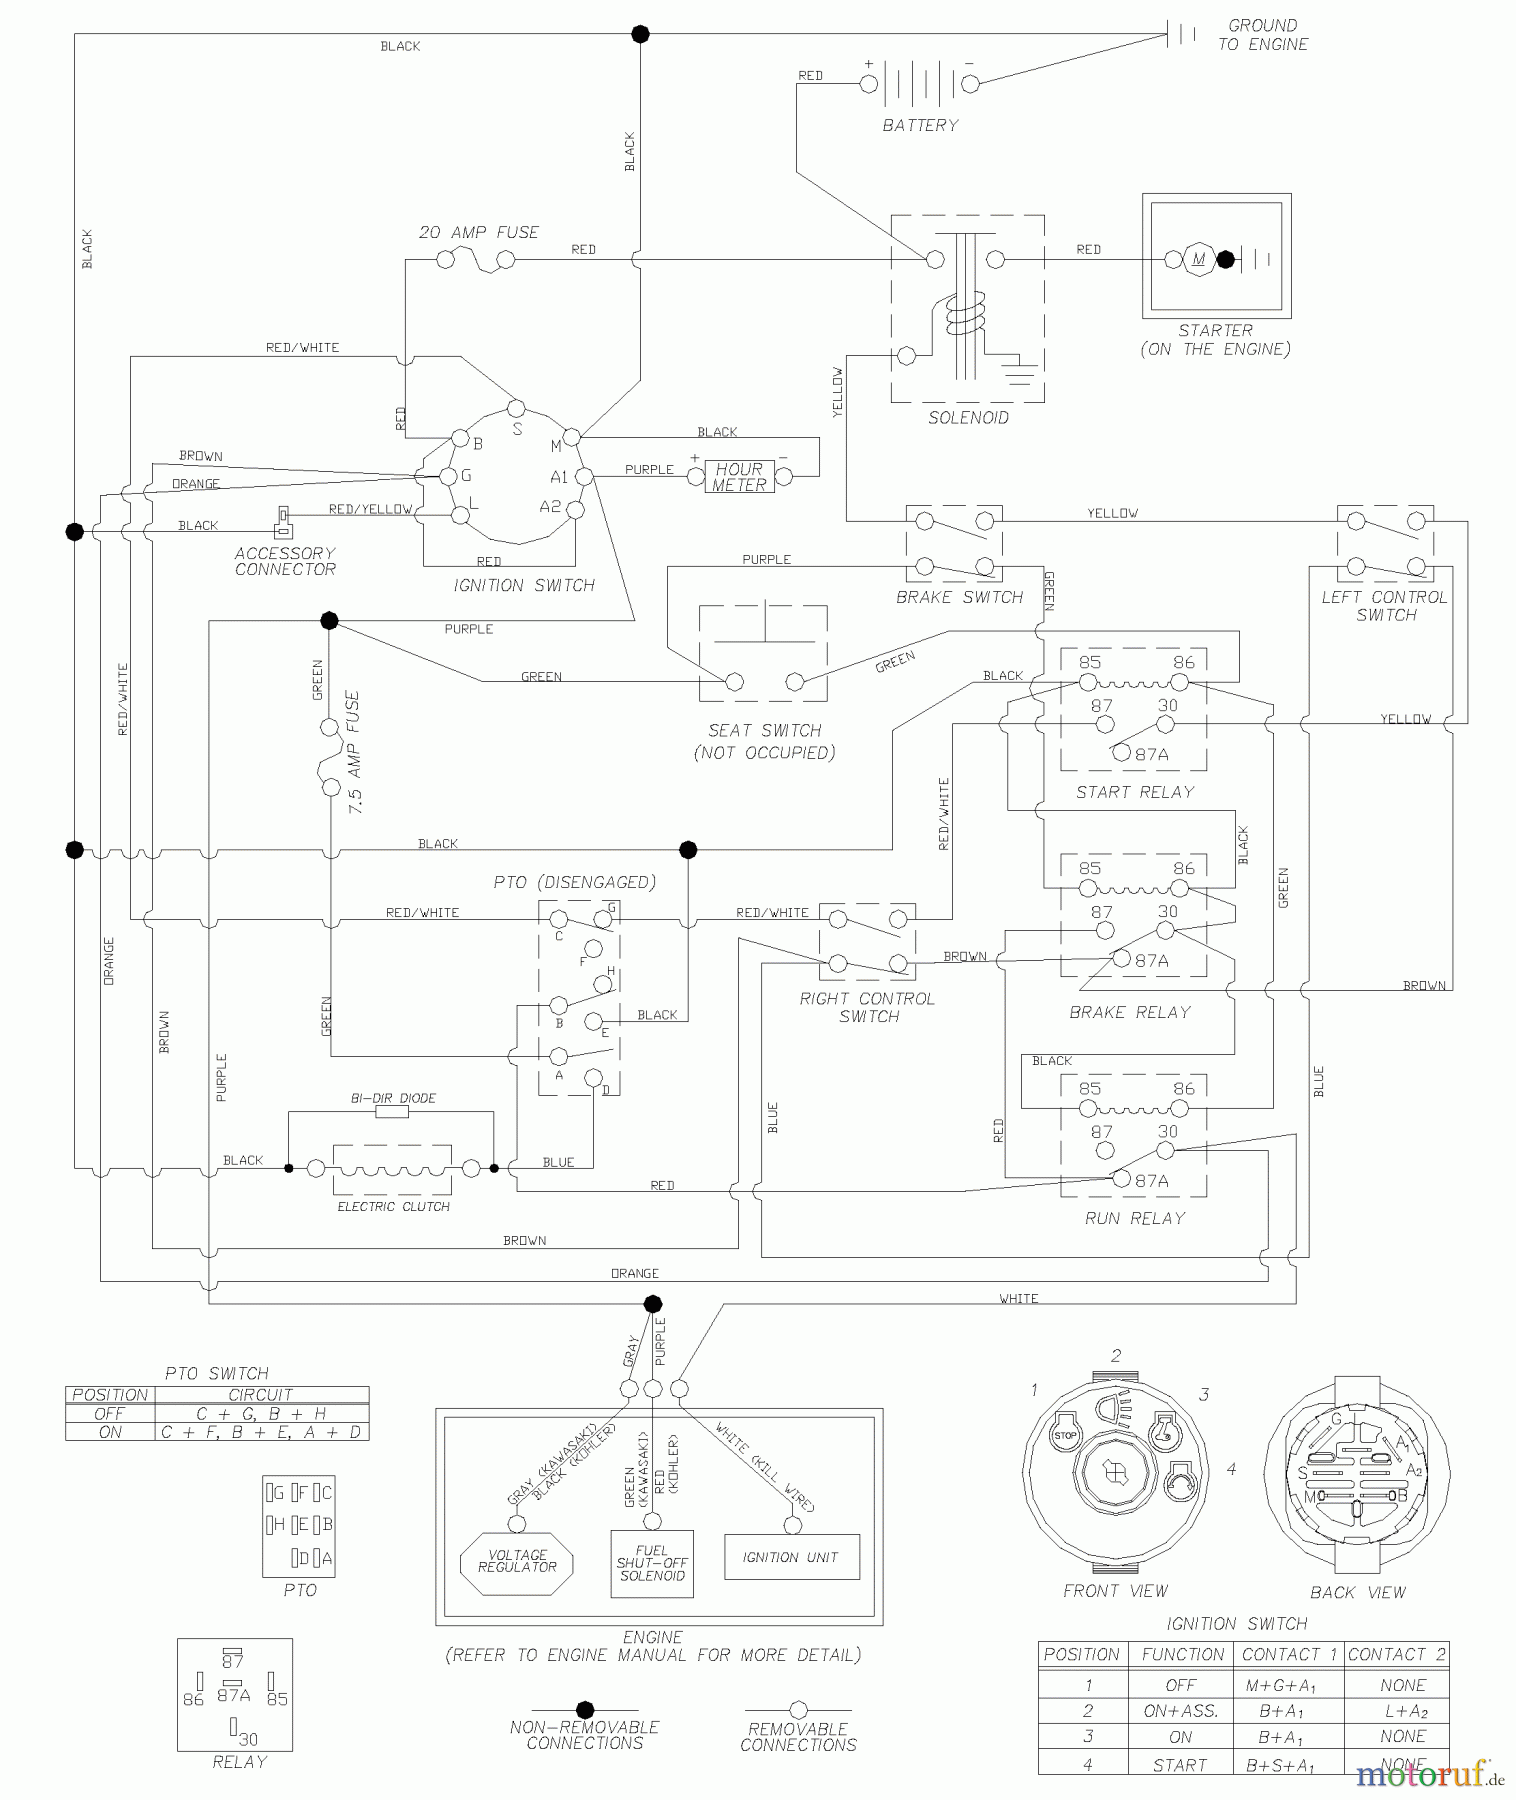  Husqvarna Nullwendekreismäher, Zero-Turn CZ 4817 (968999220) - Husqvarna KOA Zero-Turn Mower (2002-11 & After) Wiring Schematic